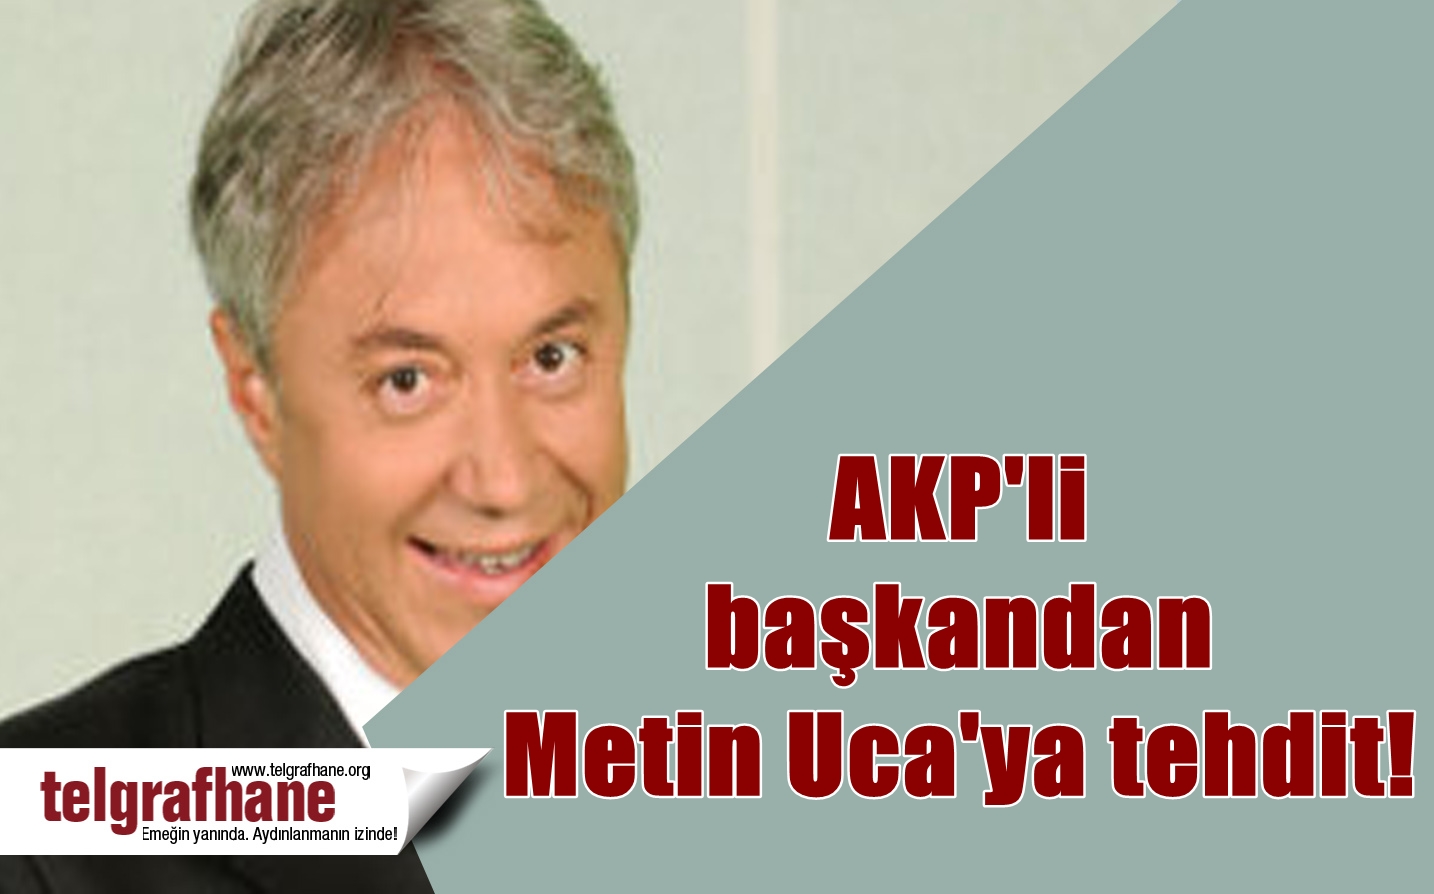 AKP’li başkandan Metin Uca’ya tehdit!